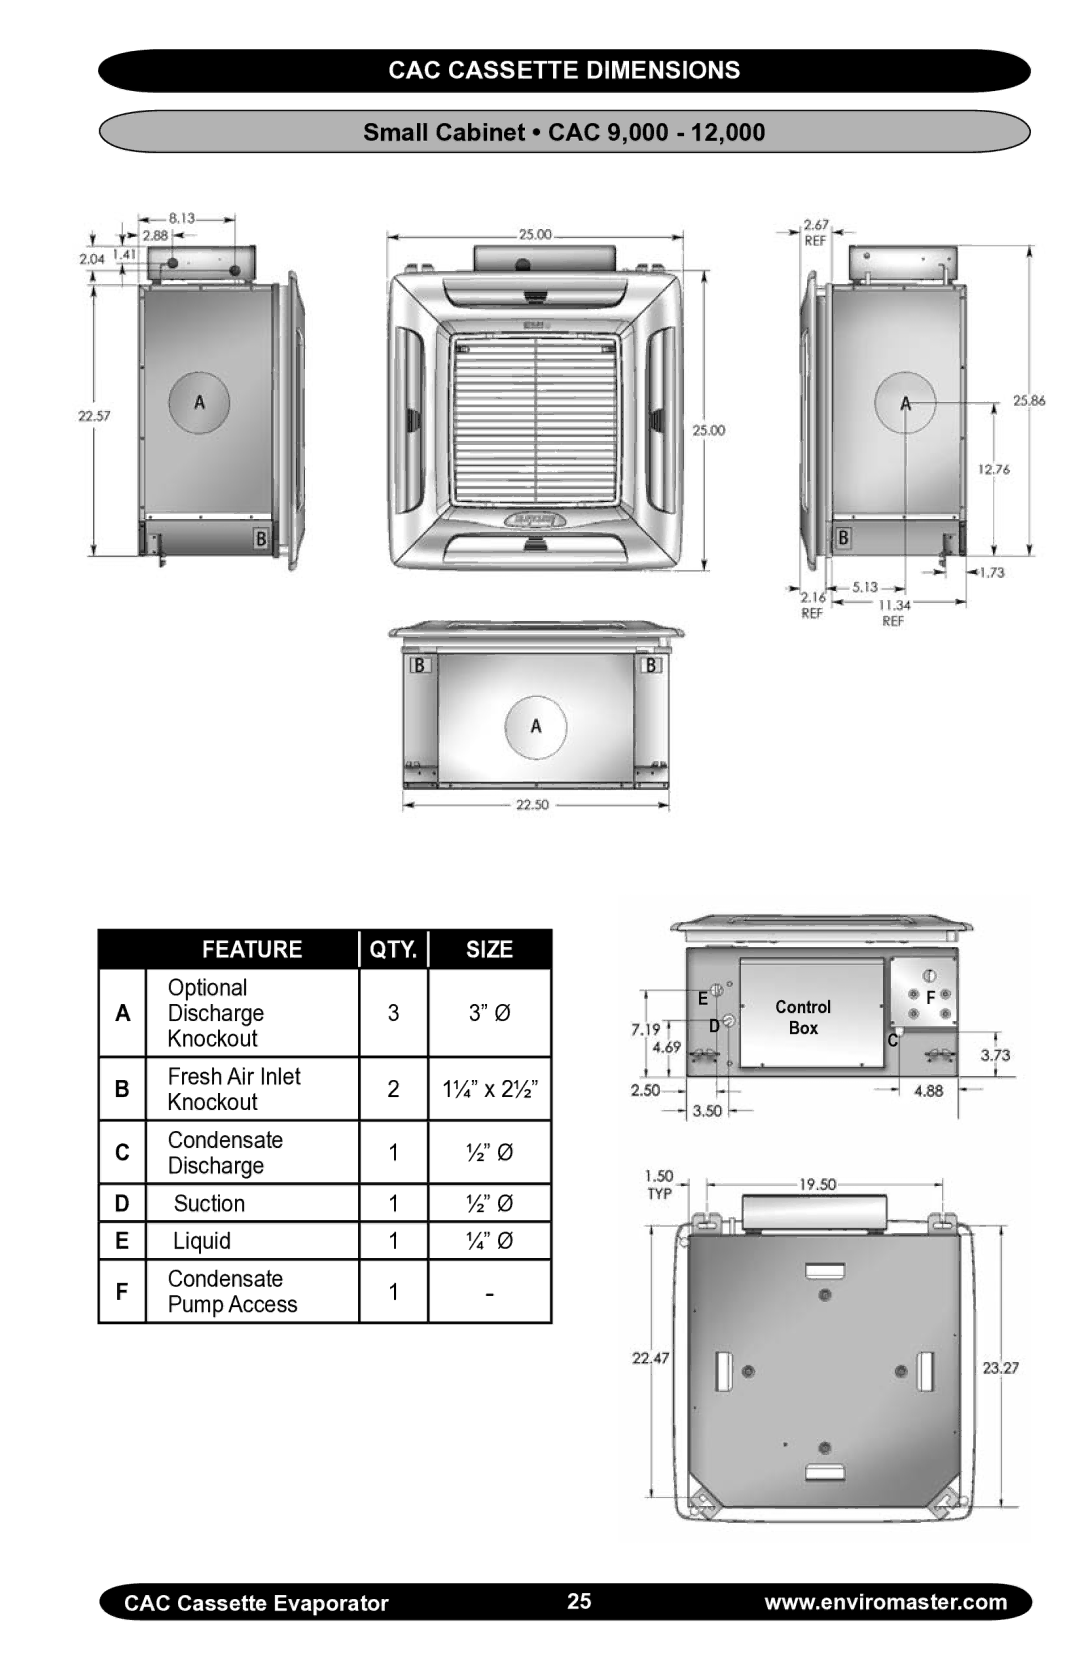 EMI manual CAC Cassette Dimensions, Small Cabinet CAC 9,000 12,000 